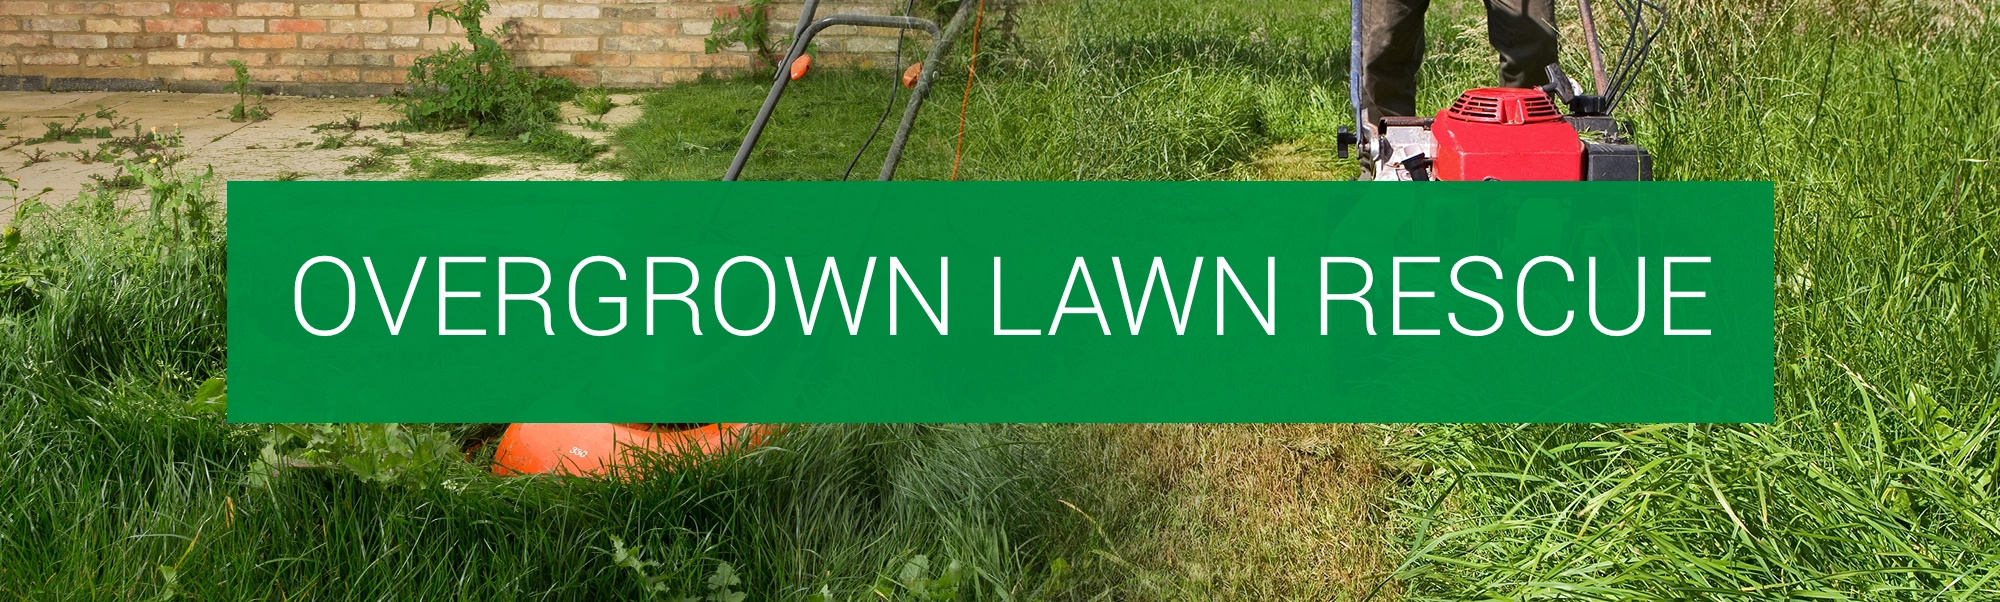 Lawn Care Services in Nebraska - Overgrown Lawn Rescue